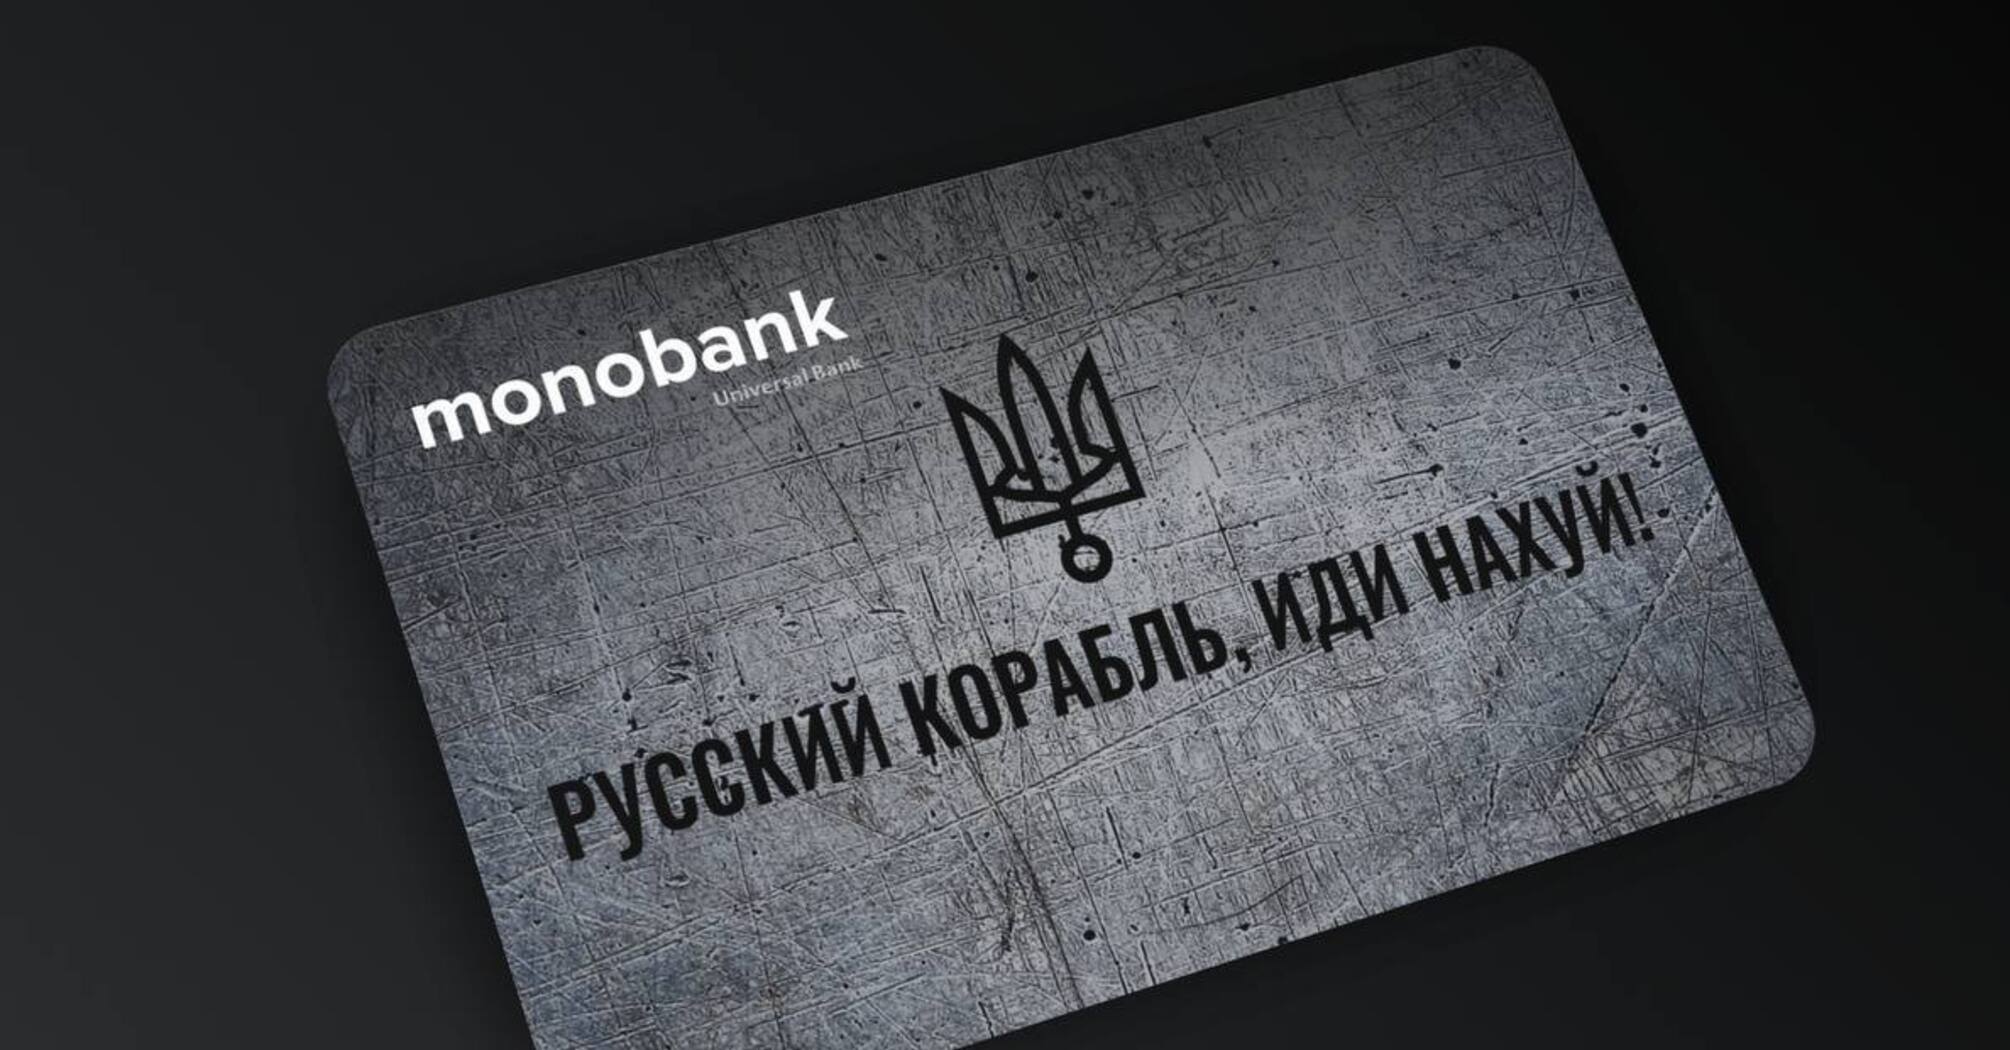 Monobank повышает тарифы на снятие наличных: названы сроки